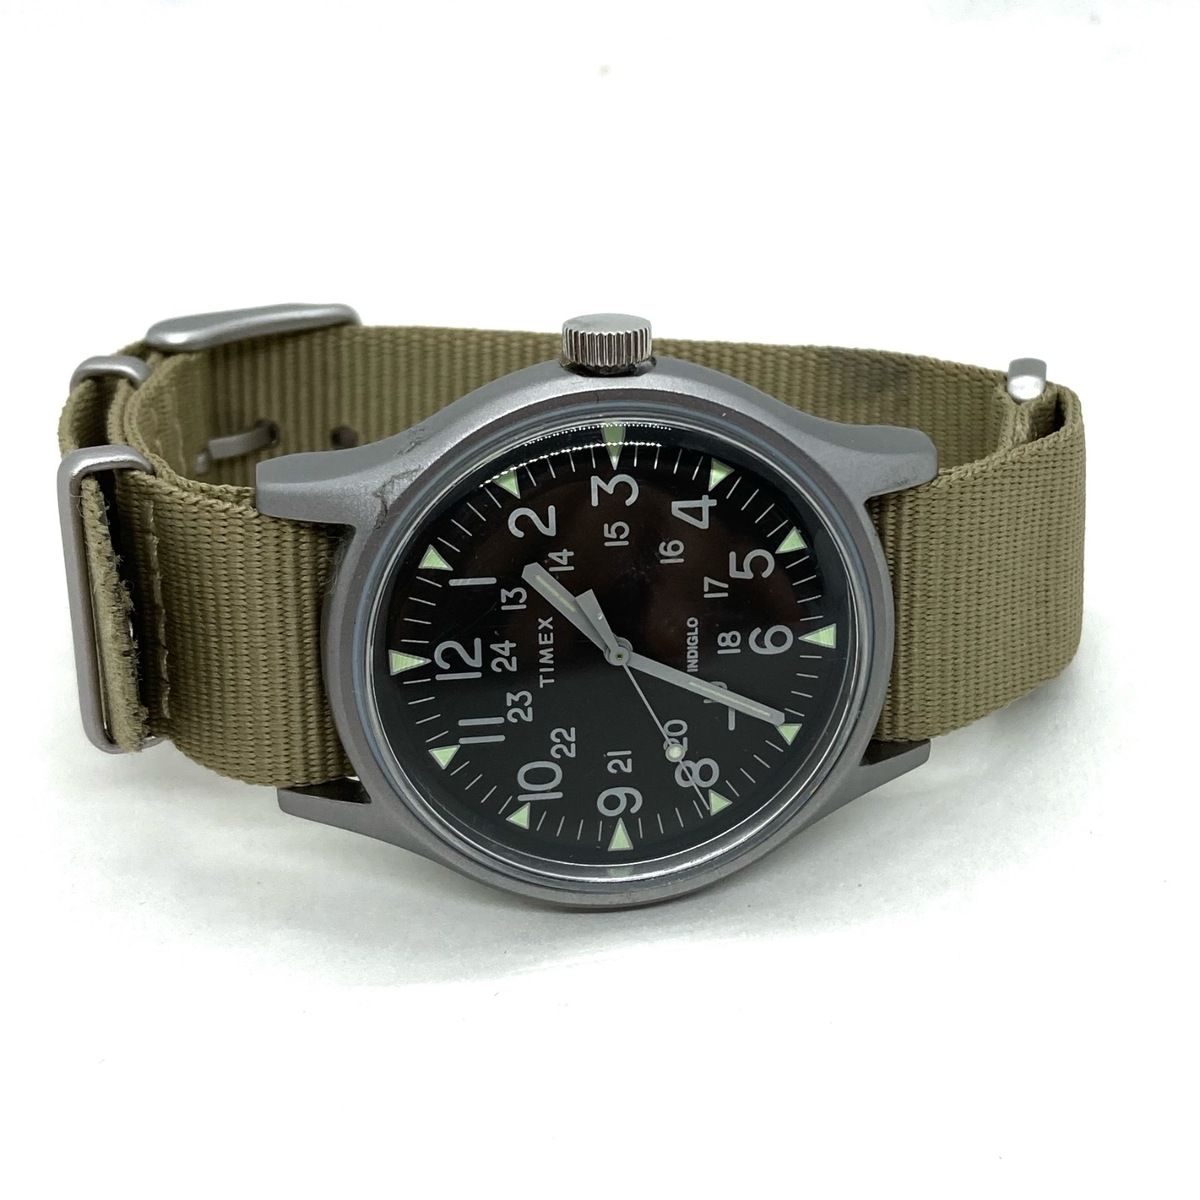 TIMEX(タイメックス) 腕時計 - CR2016 ボーイズ 黒 - メルカリ